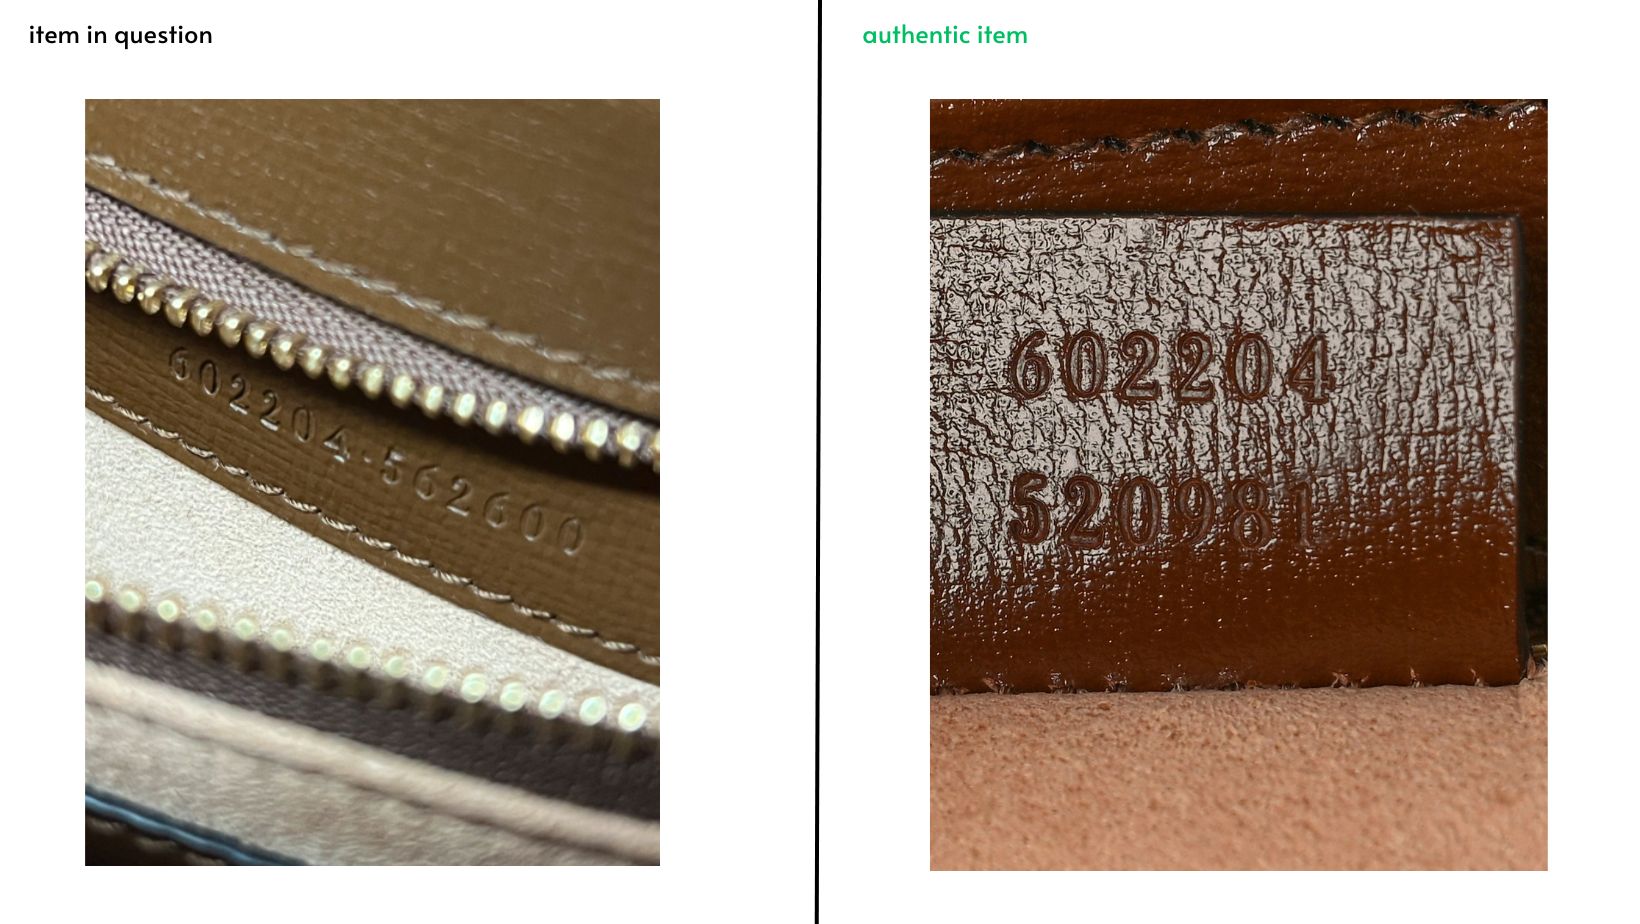 authenticating gucci horsebit bag serial number